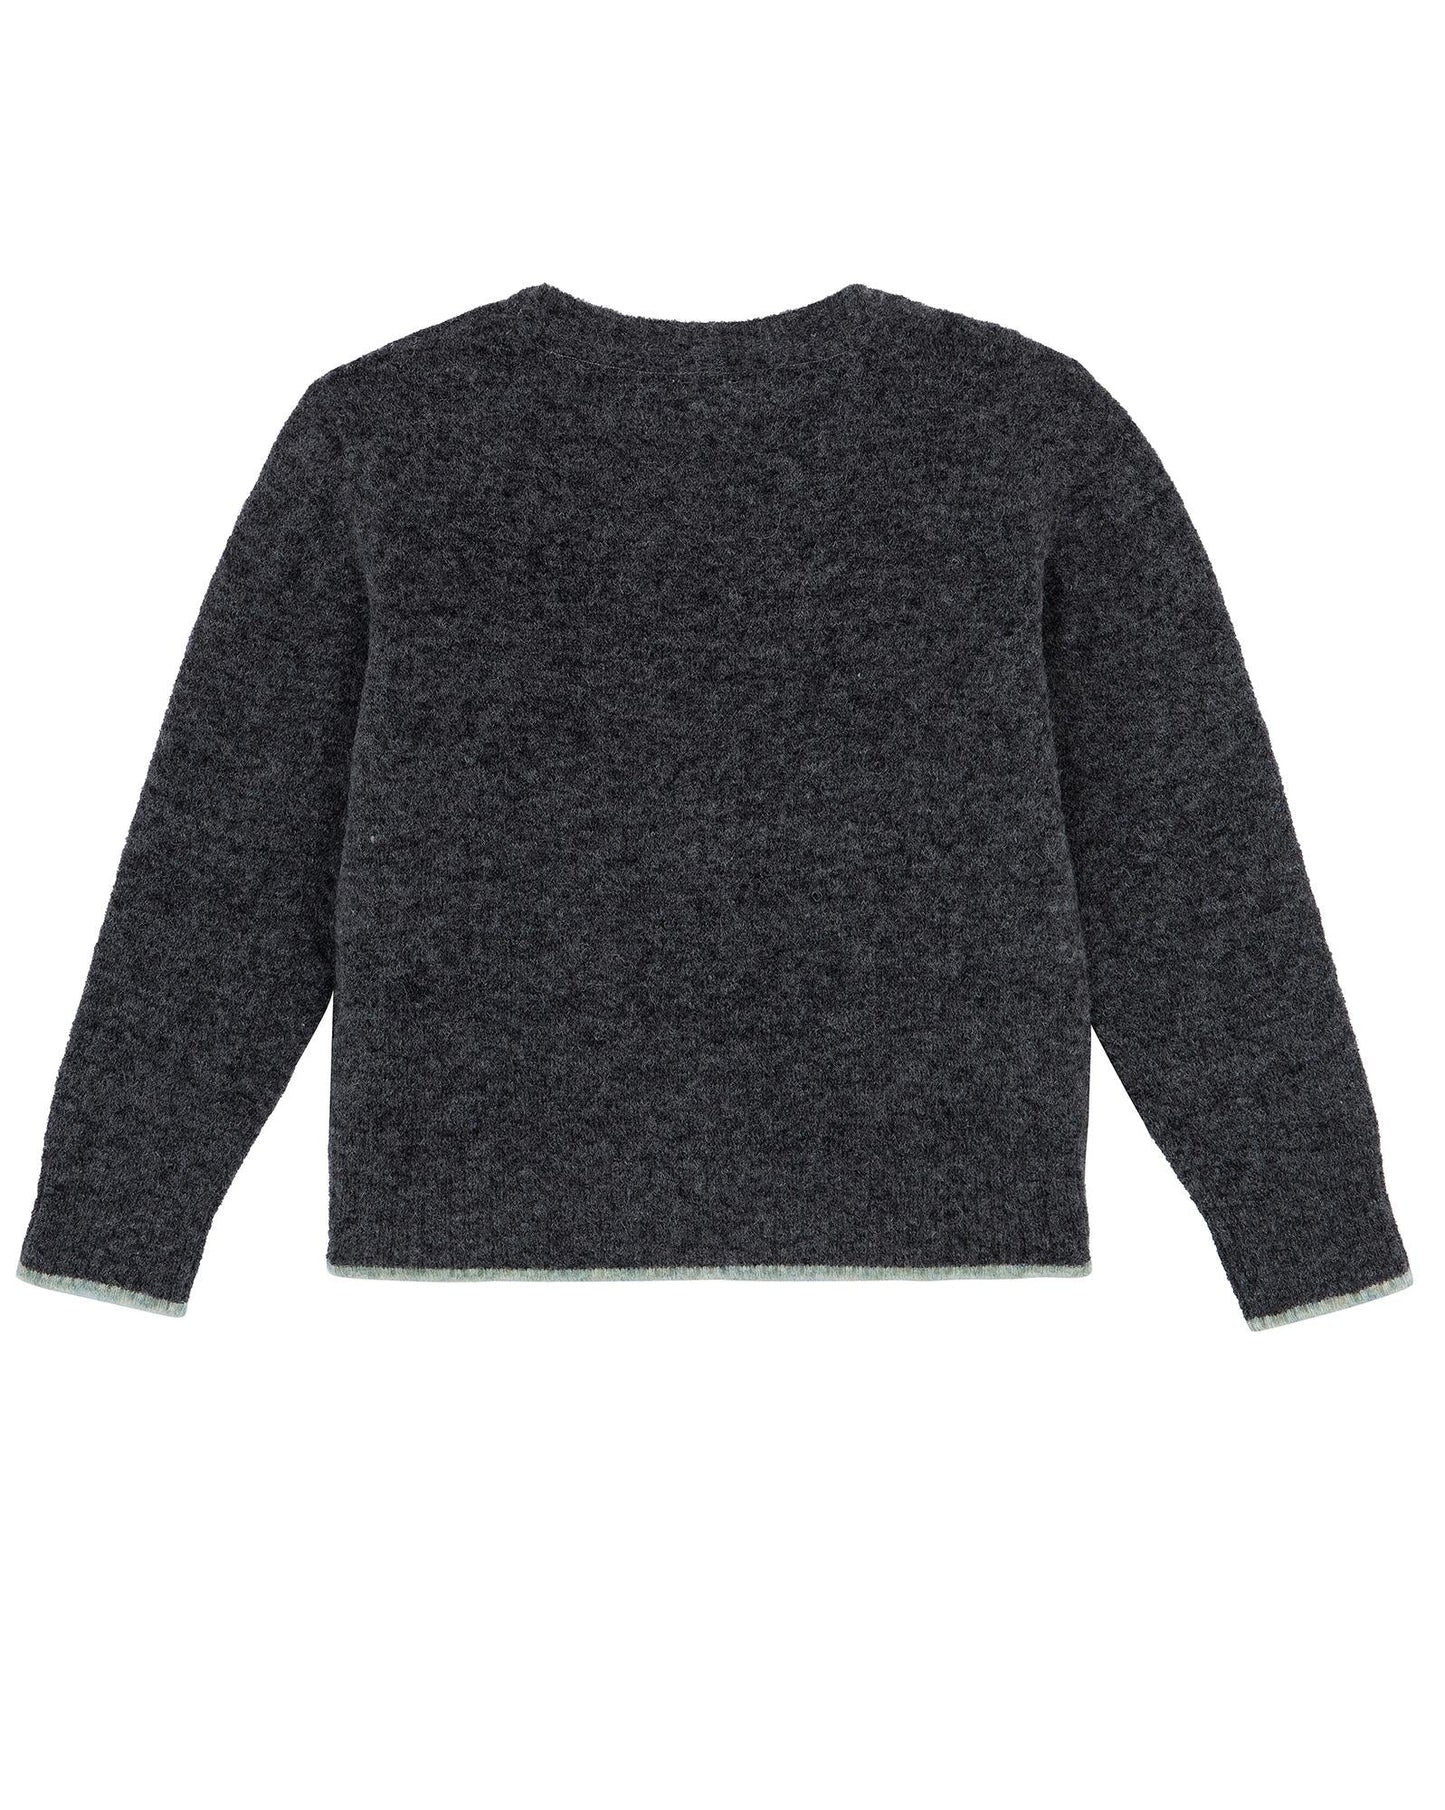 Cardigan - Grey Long sleeve in knit